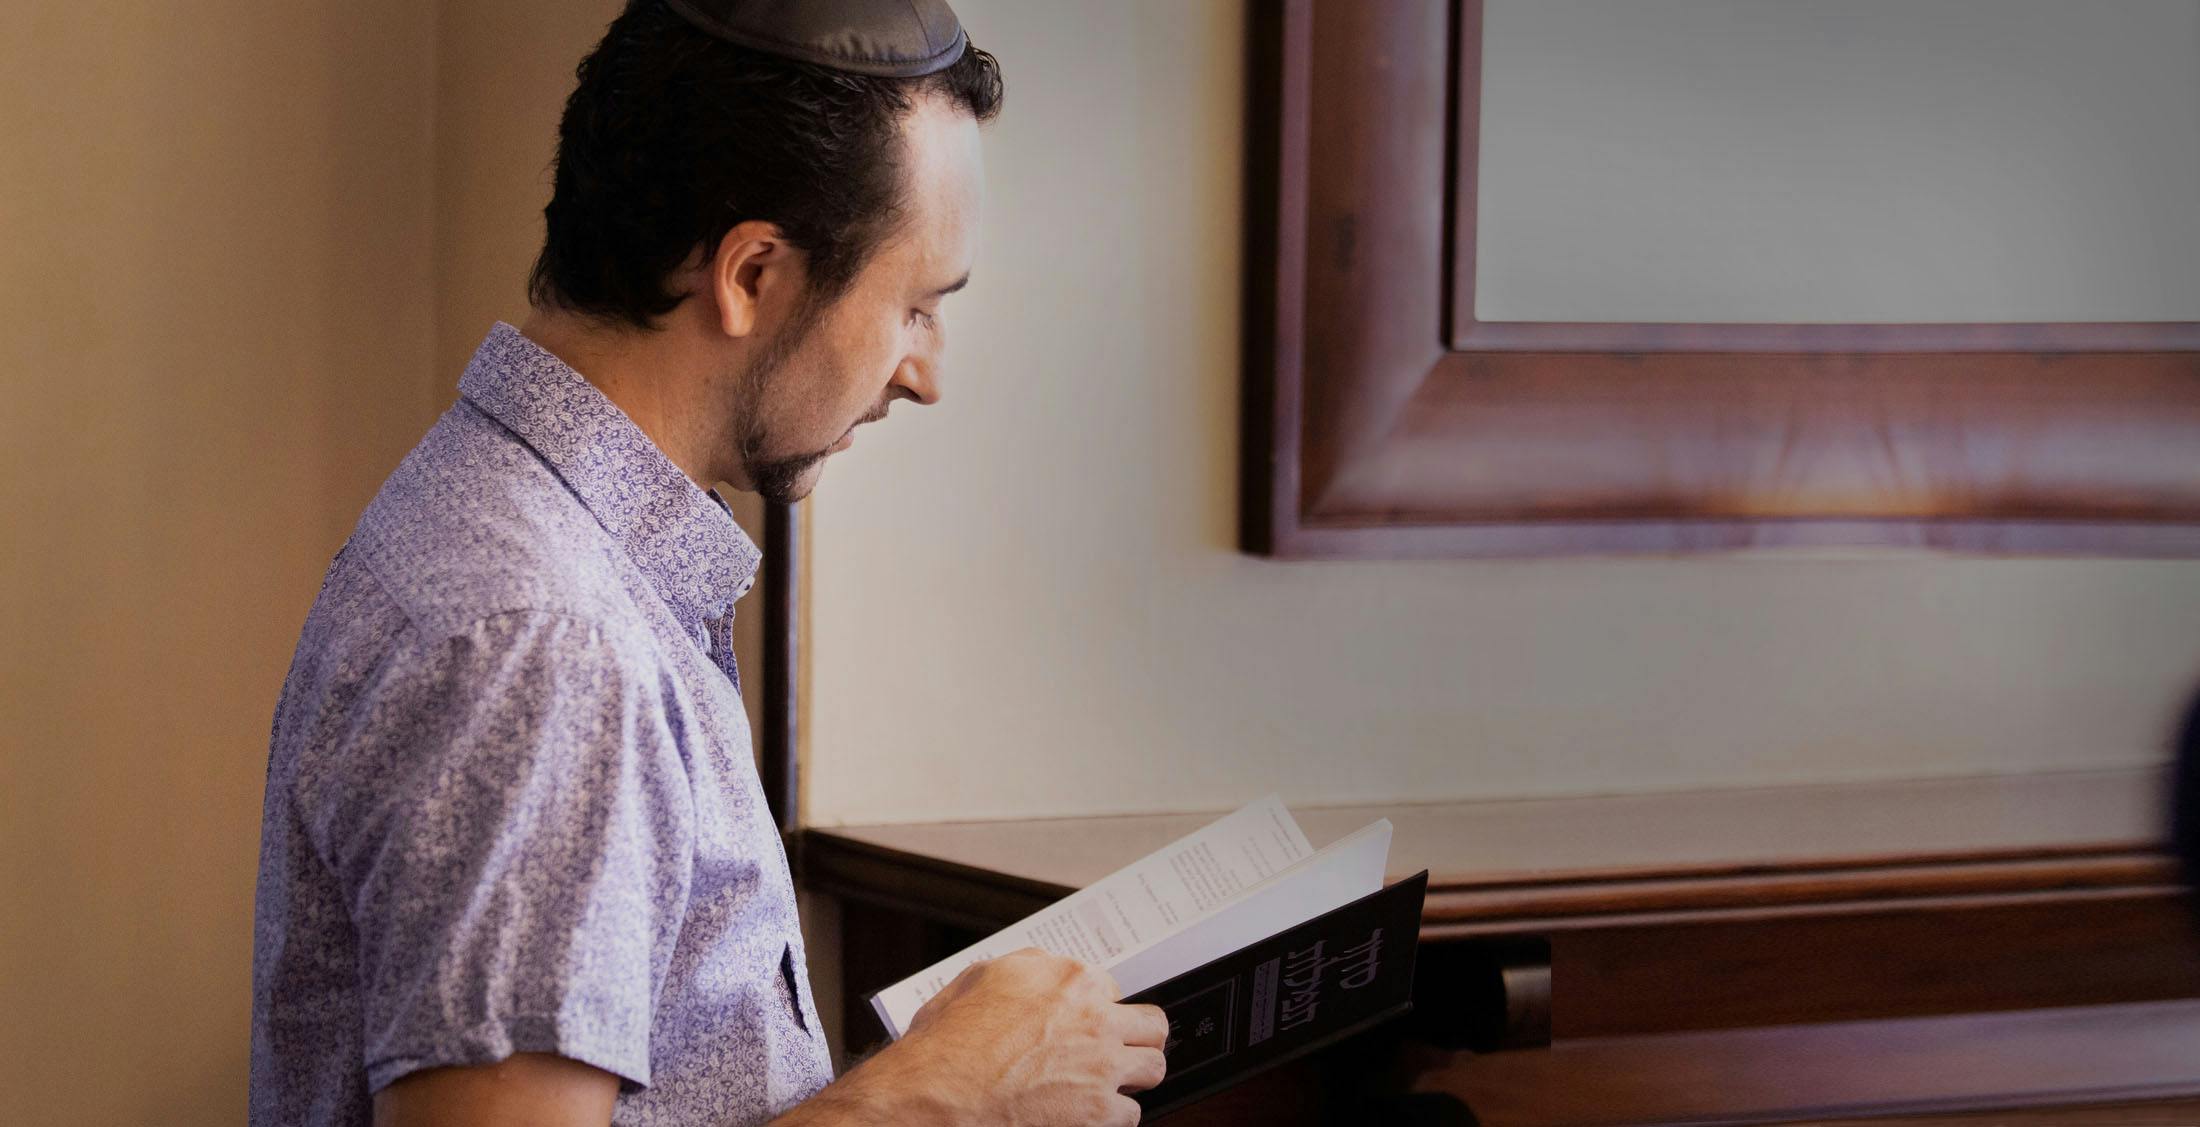 Messianic Jewish man reading the Torah